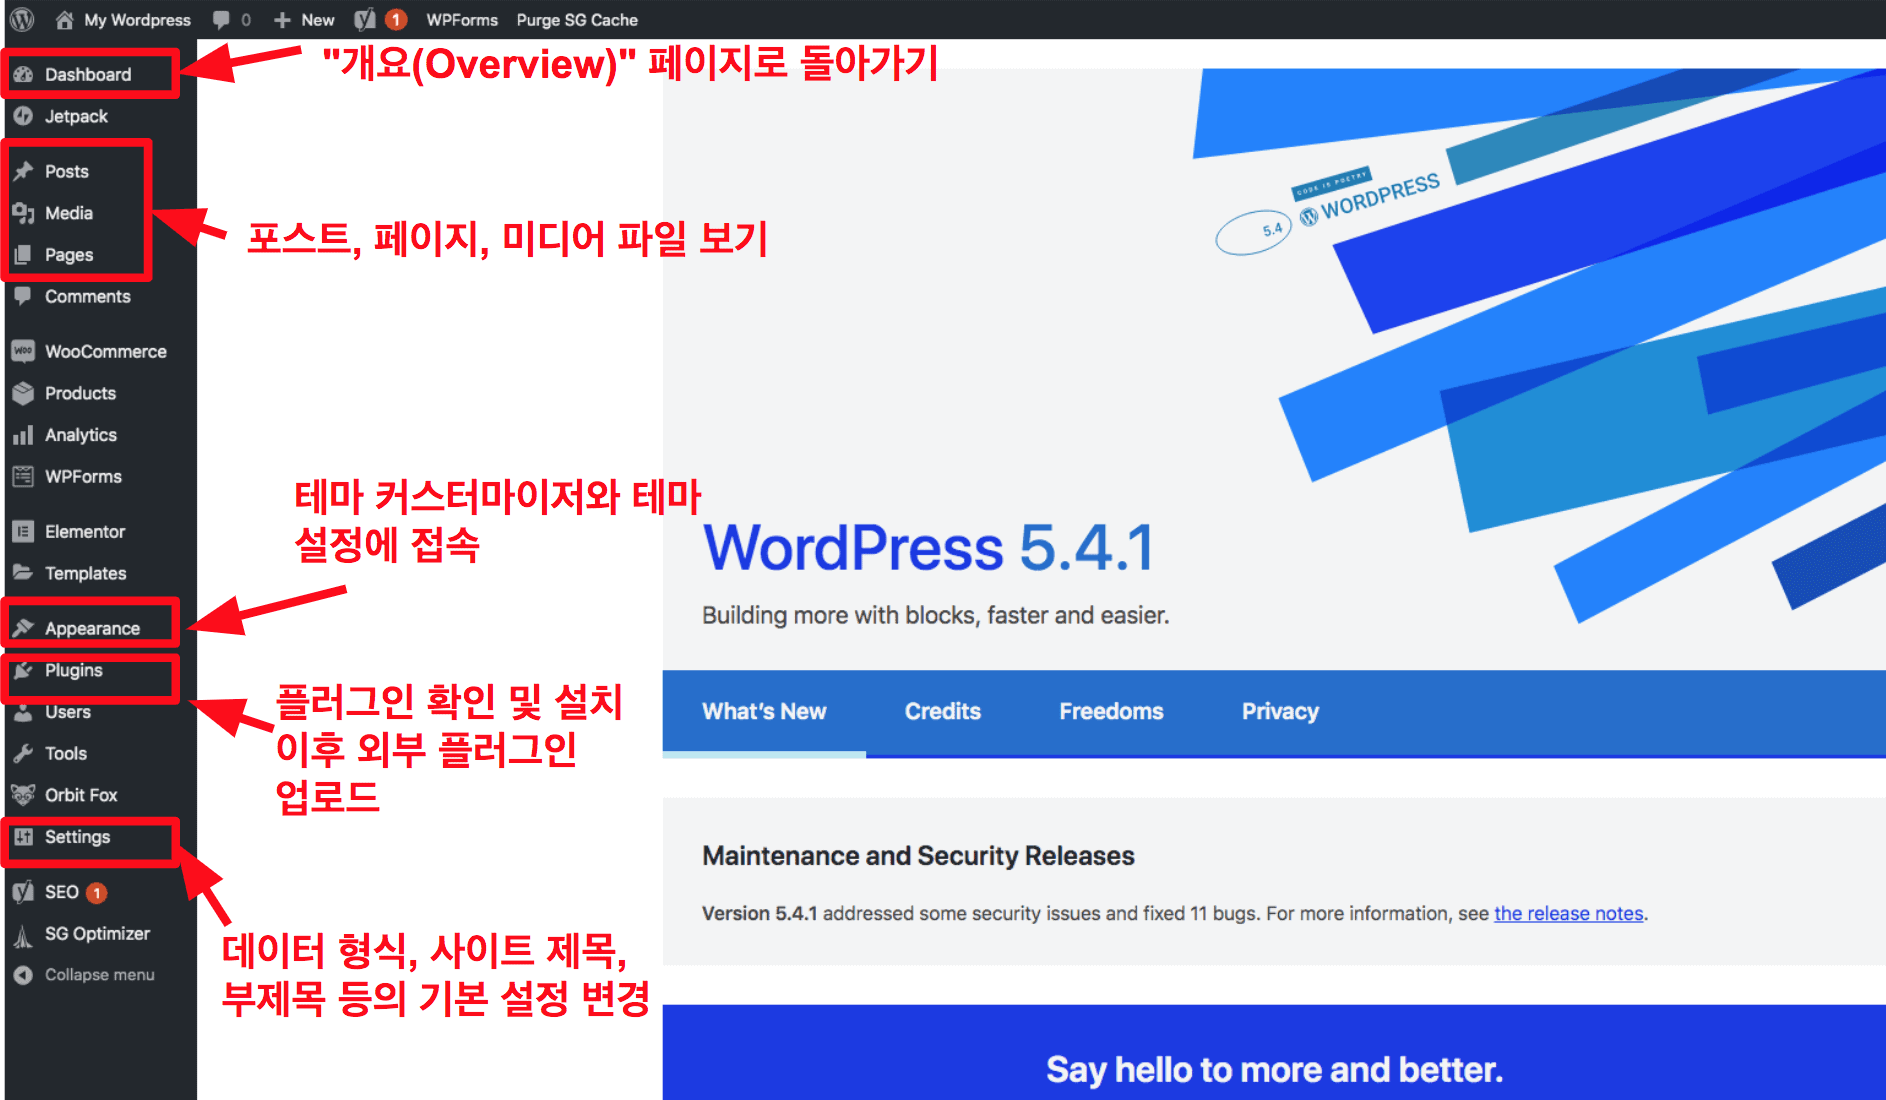 The WordPress dashboard KO16